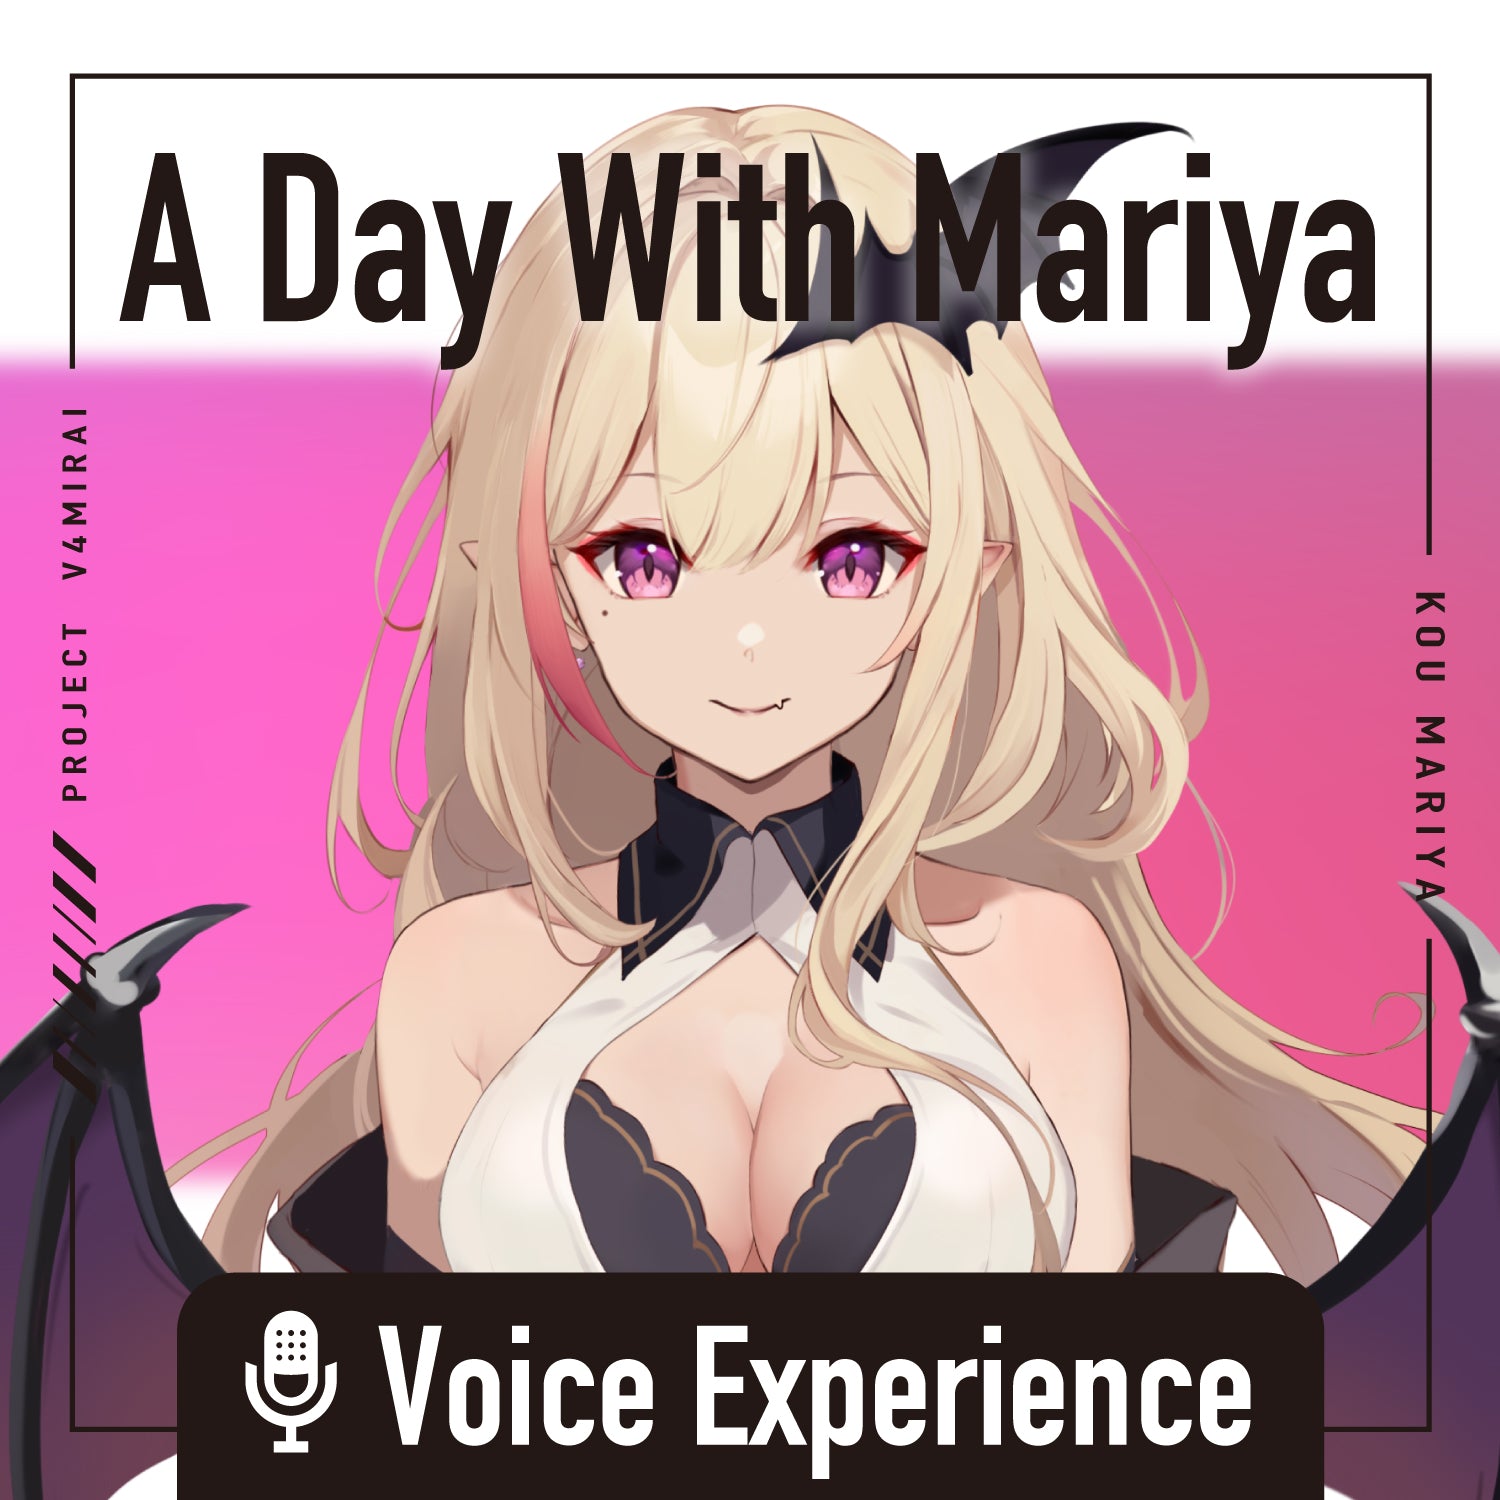 A Day With Mariya - Voice Experience